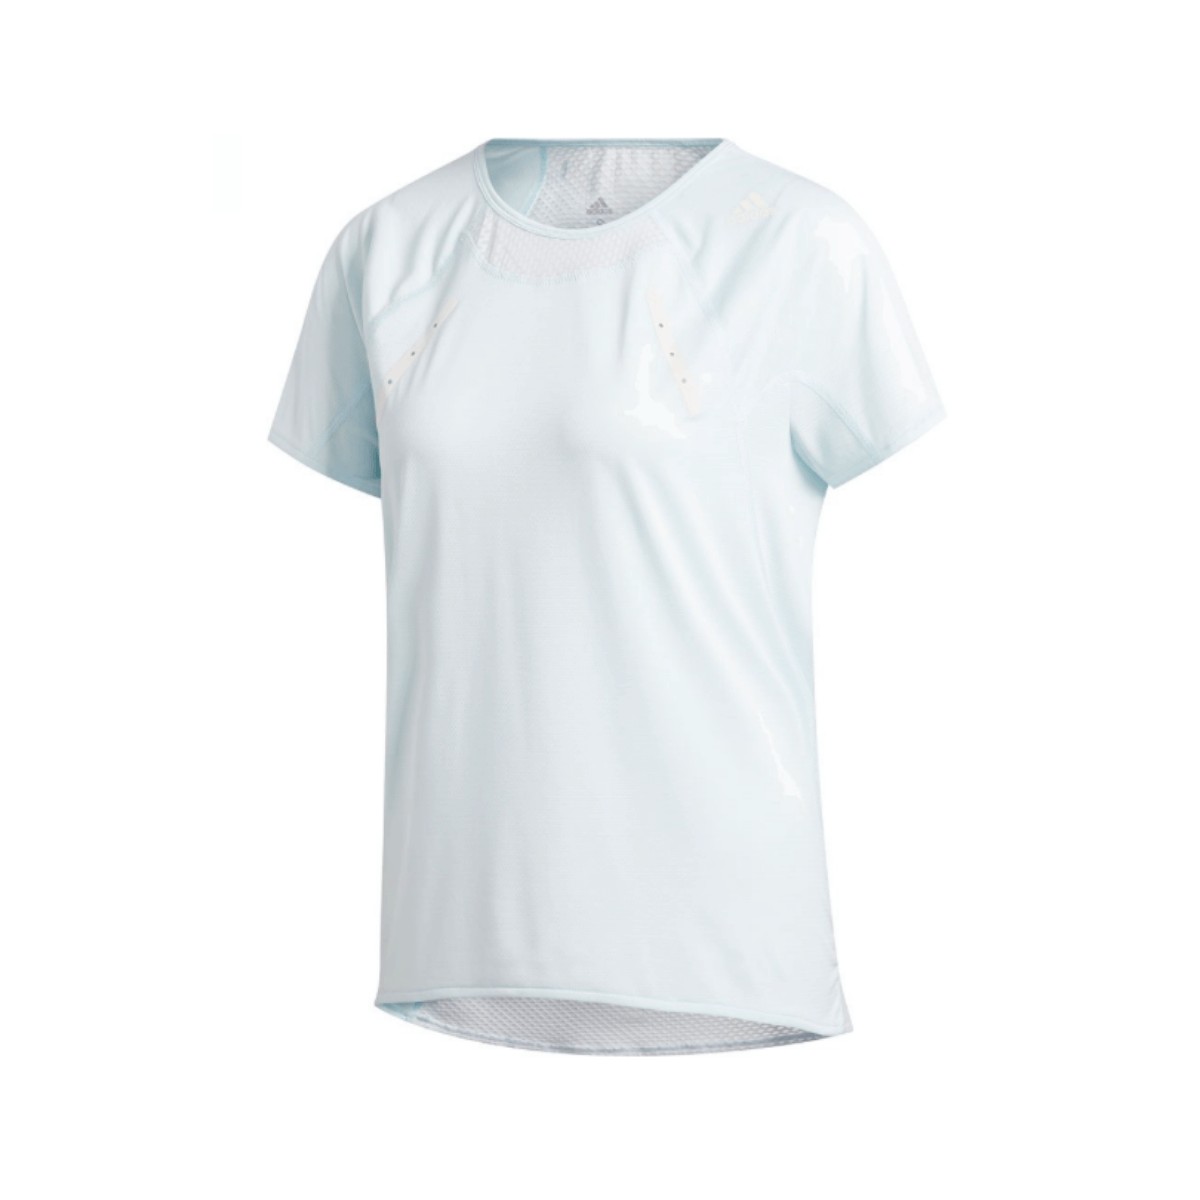 Camiseta Adidas manga curta mulher seca, Tamanho M